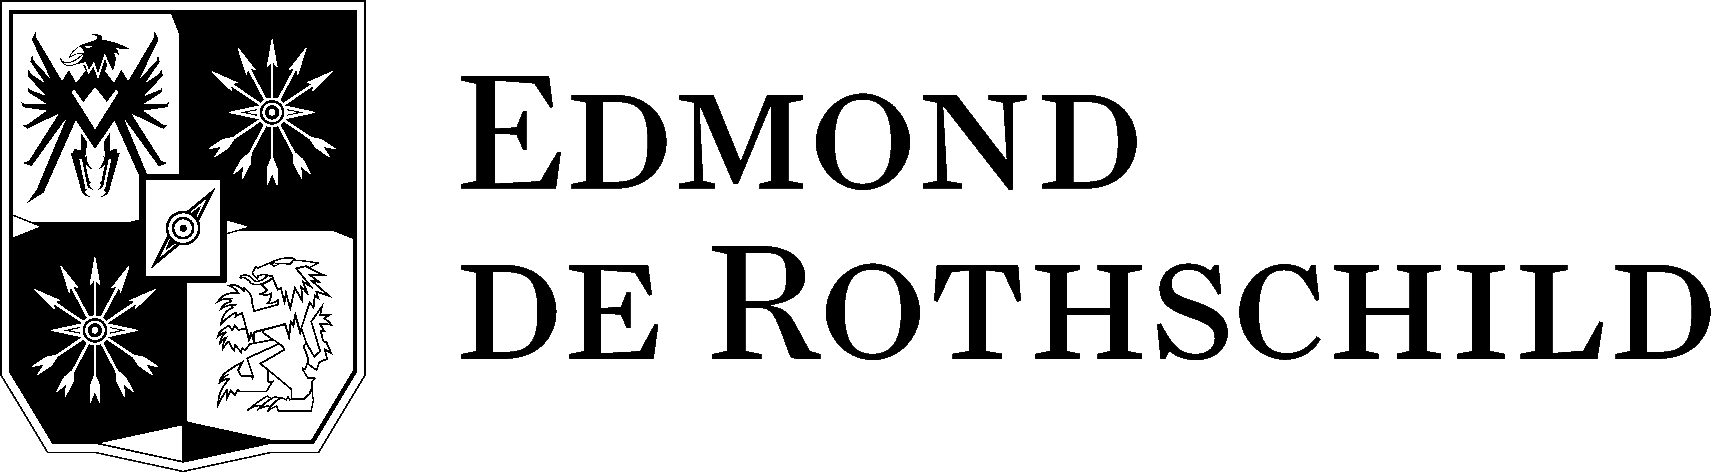 Logotipo de Edmond de Rothschild 1